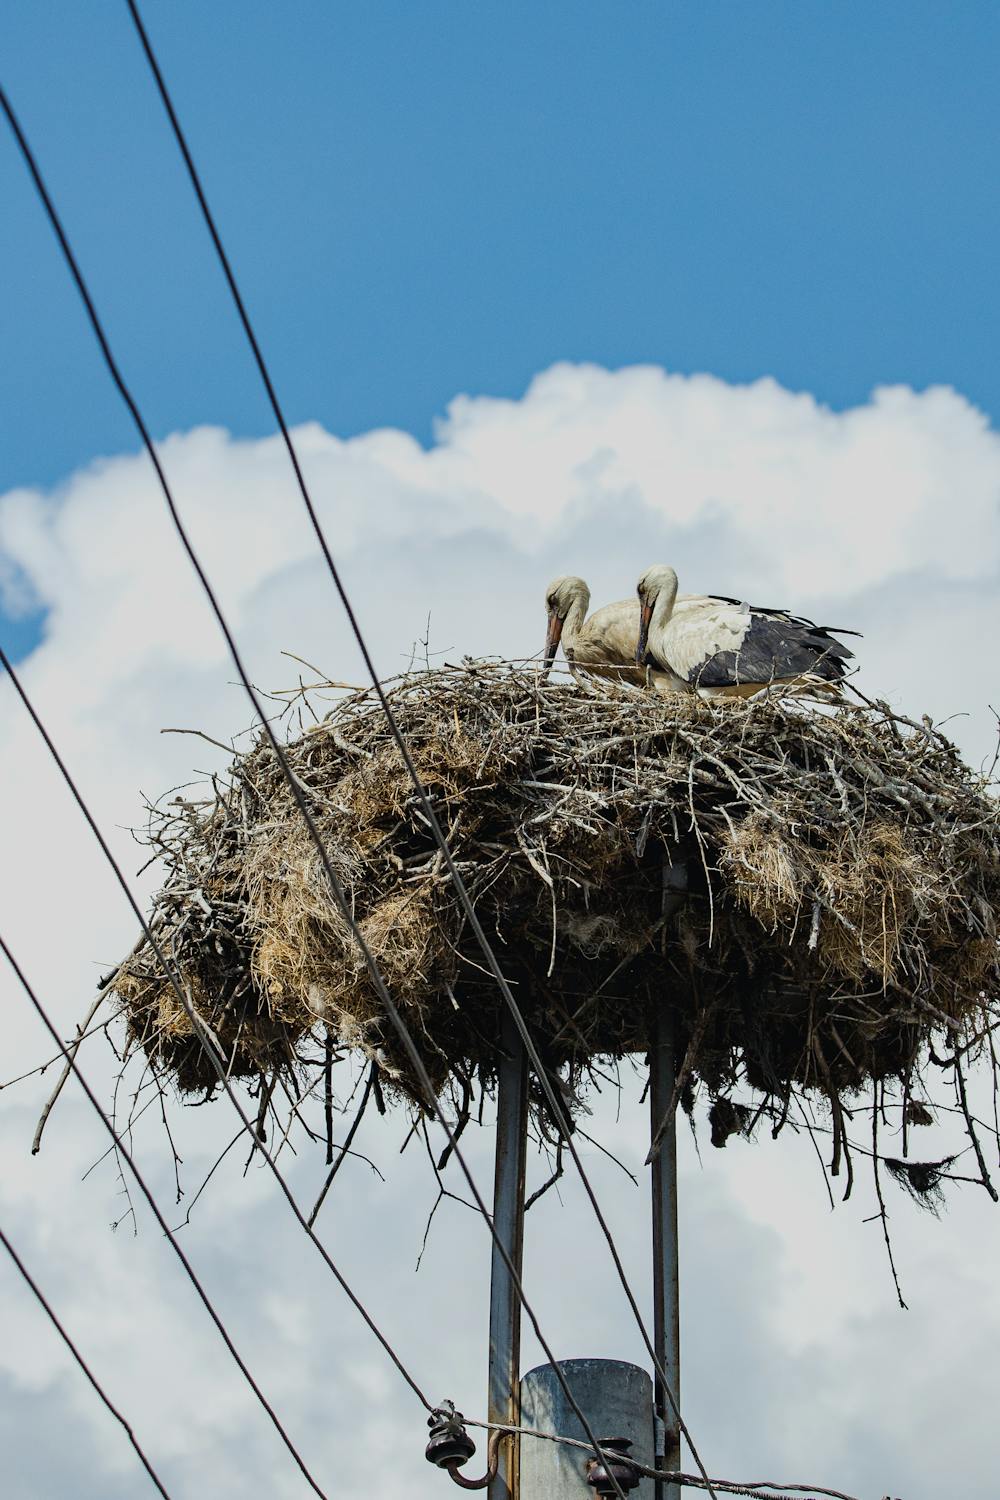 free-photo-of-storks-in-nest-on-utility-pole.jpeg?auto=compress&cs=tinysrgb&w=1260&h=750&dpr=2